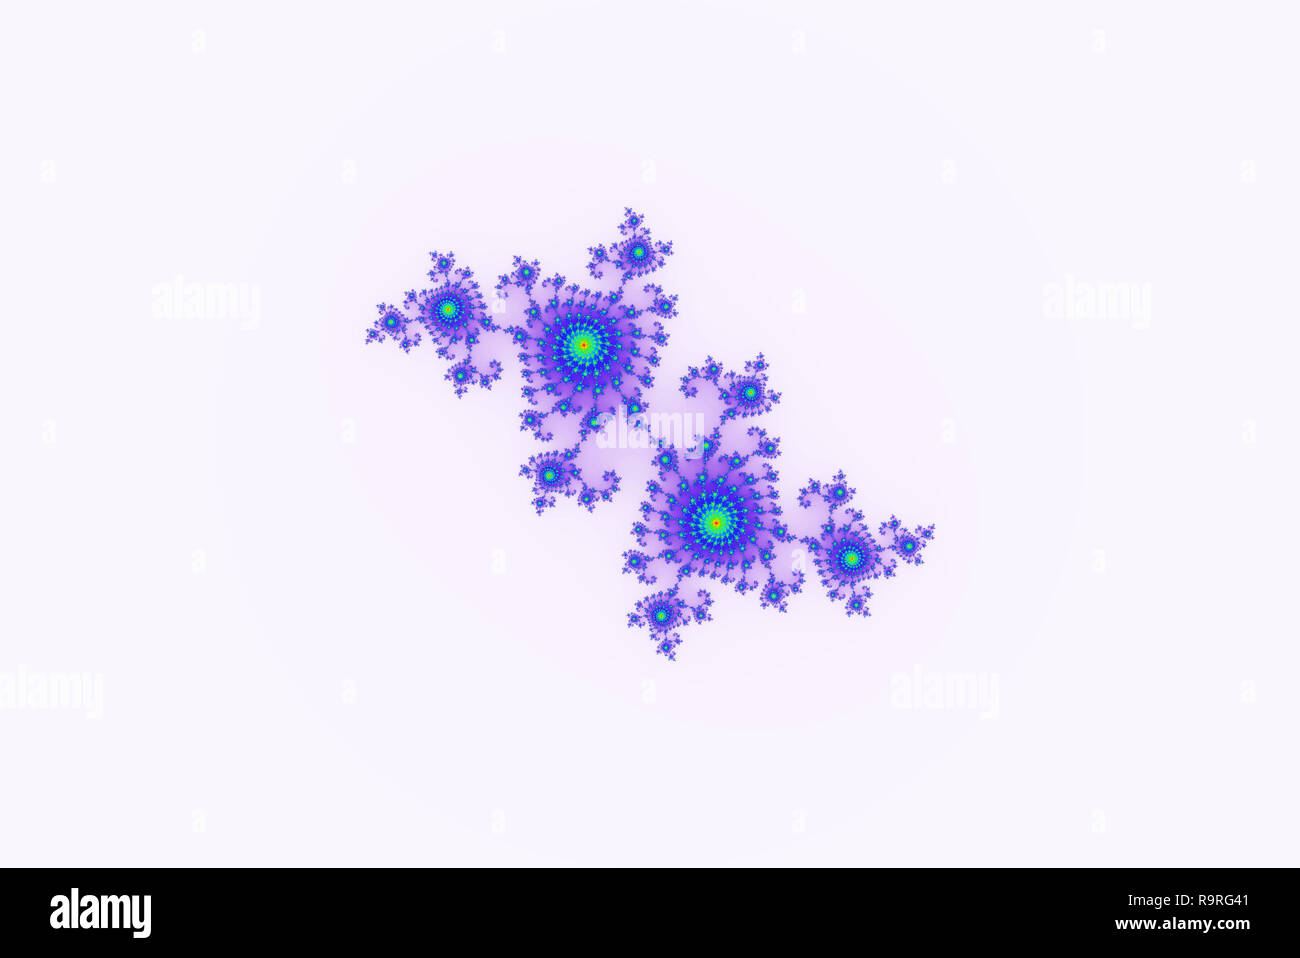 Mandelbrot fractal geometrico astratto sfondo con forme ipnotico Foto Stock